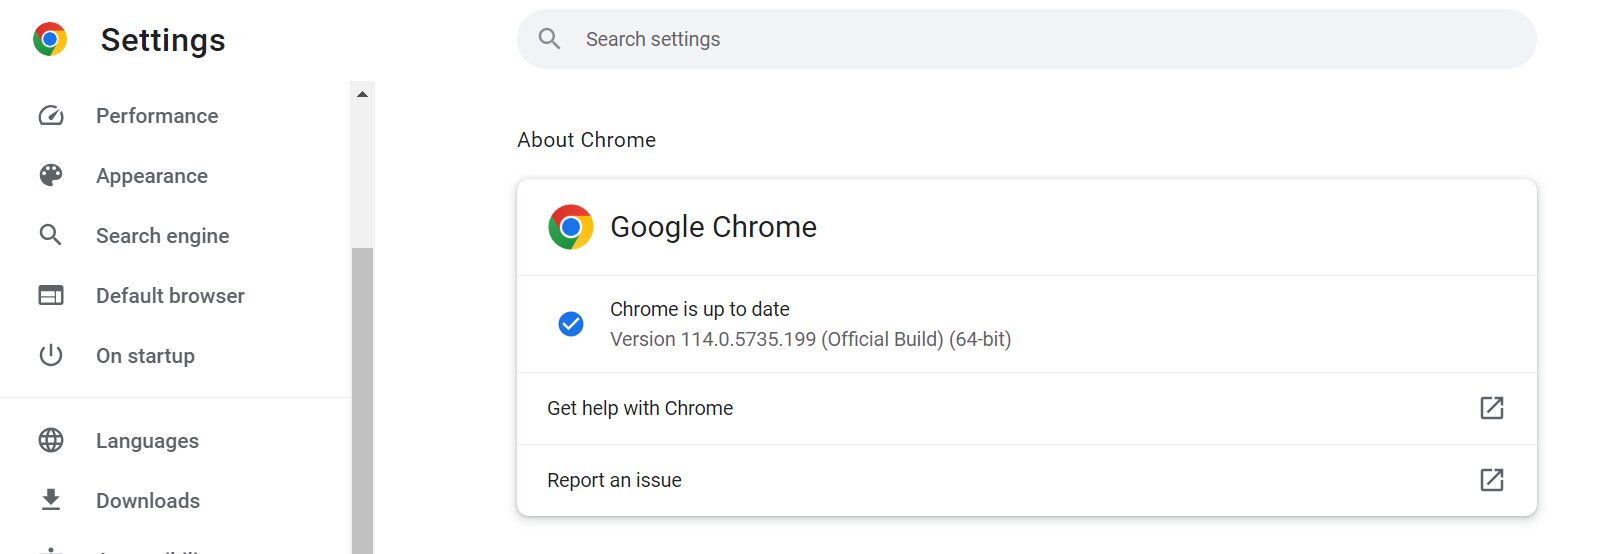 Google chrome settings